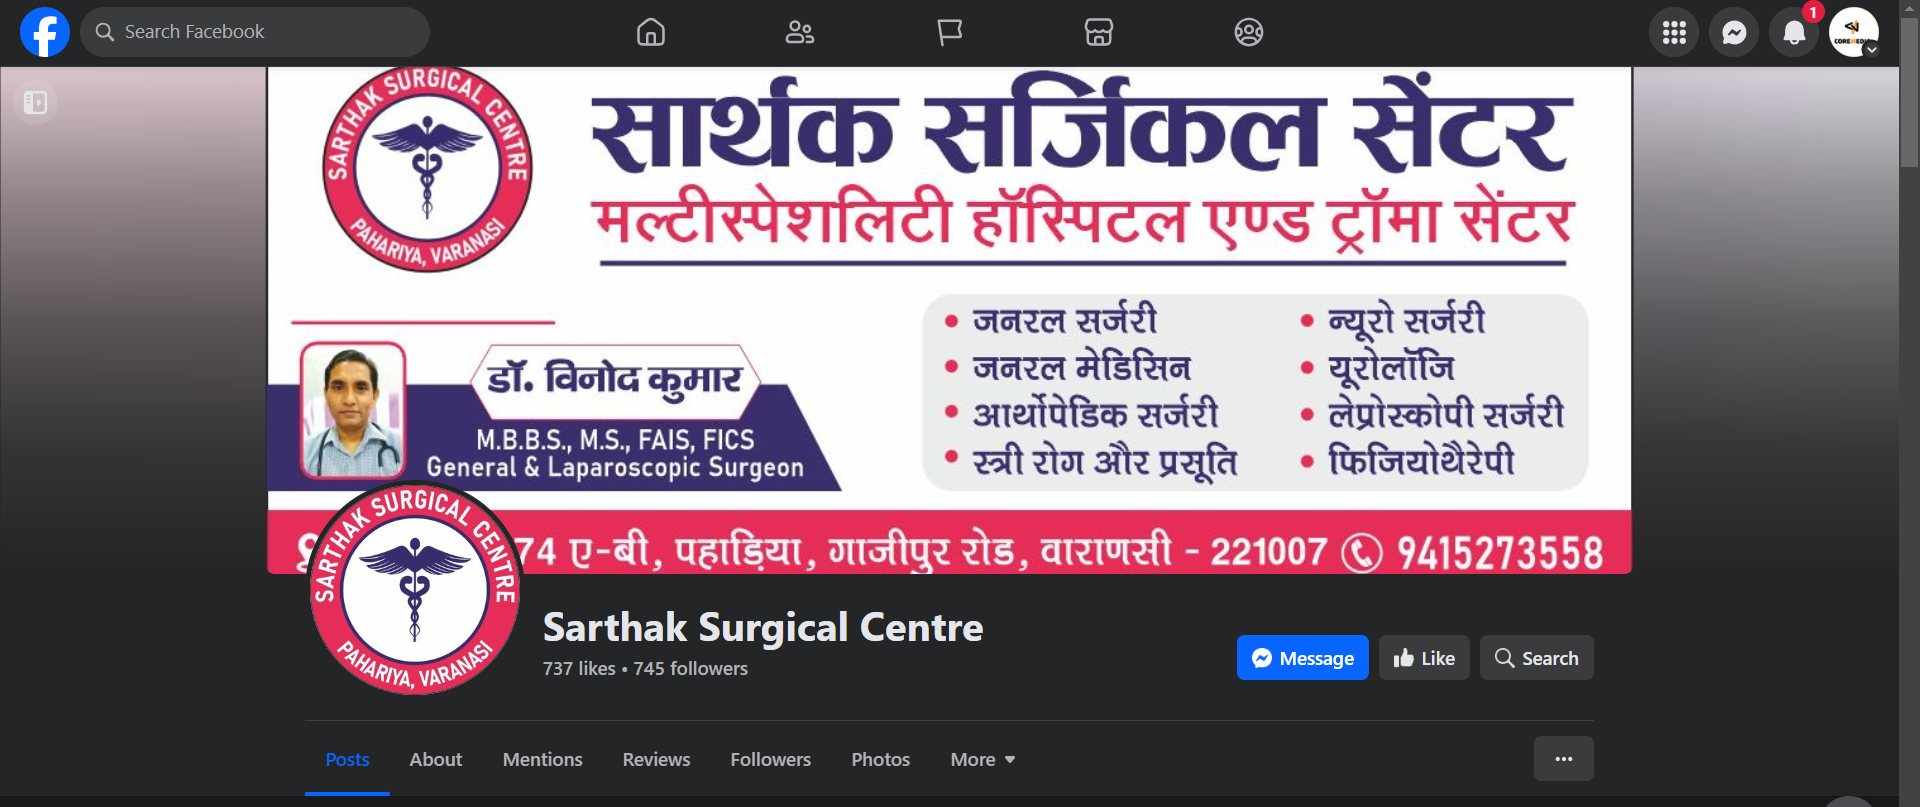 Sarthak Surgical Centre